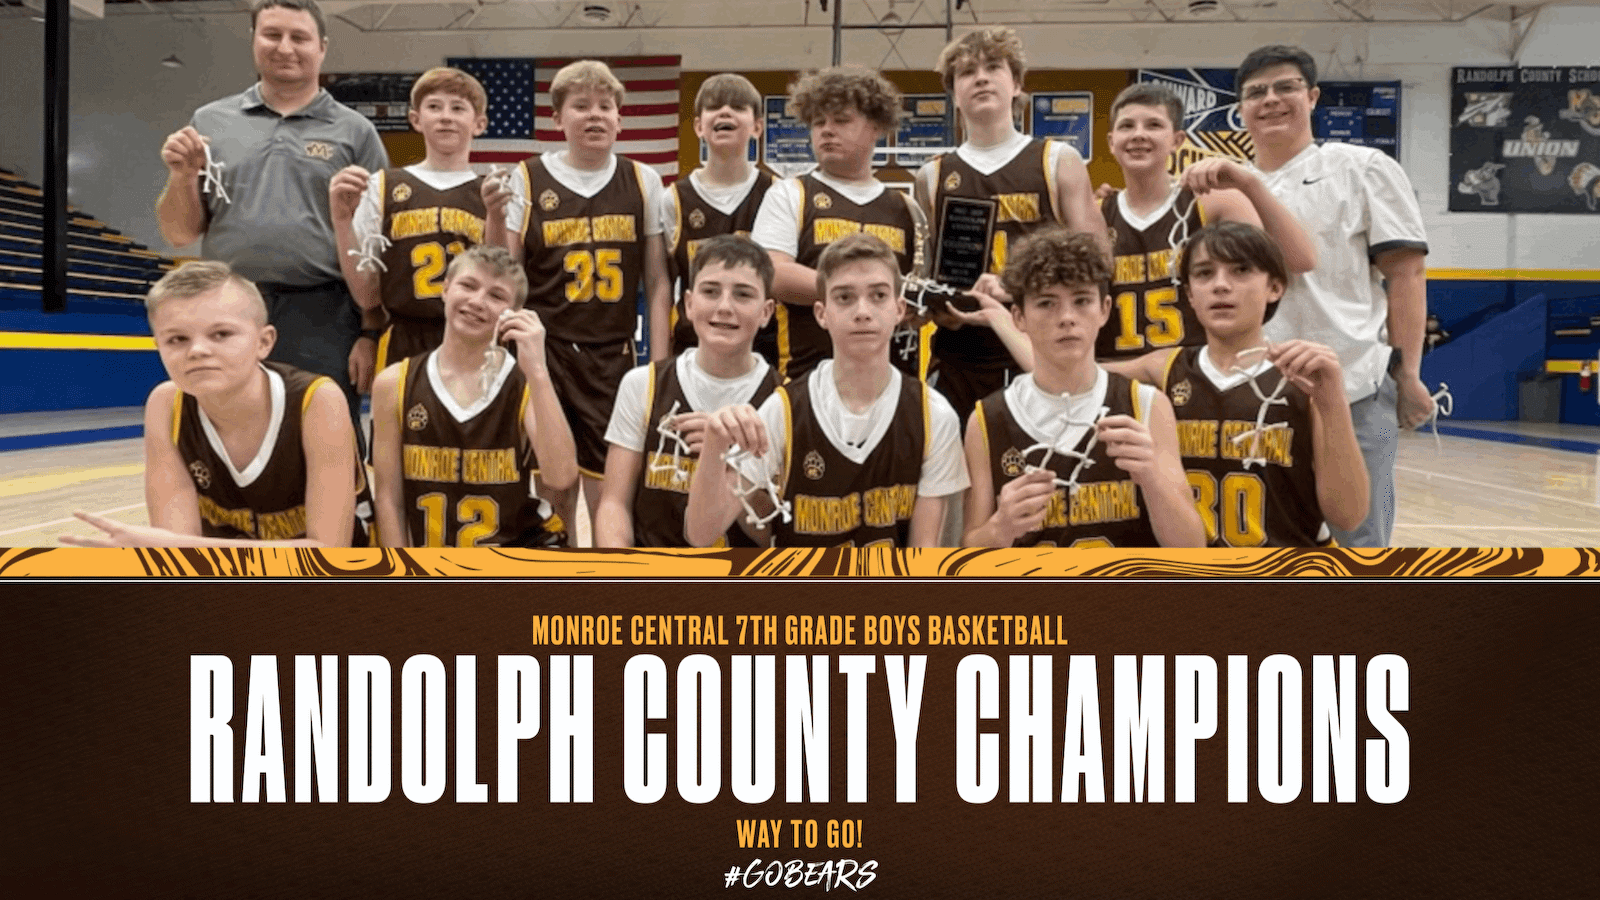 7th Grade Boys Basketball wins the Randolph County Championship cover photo